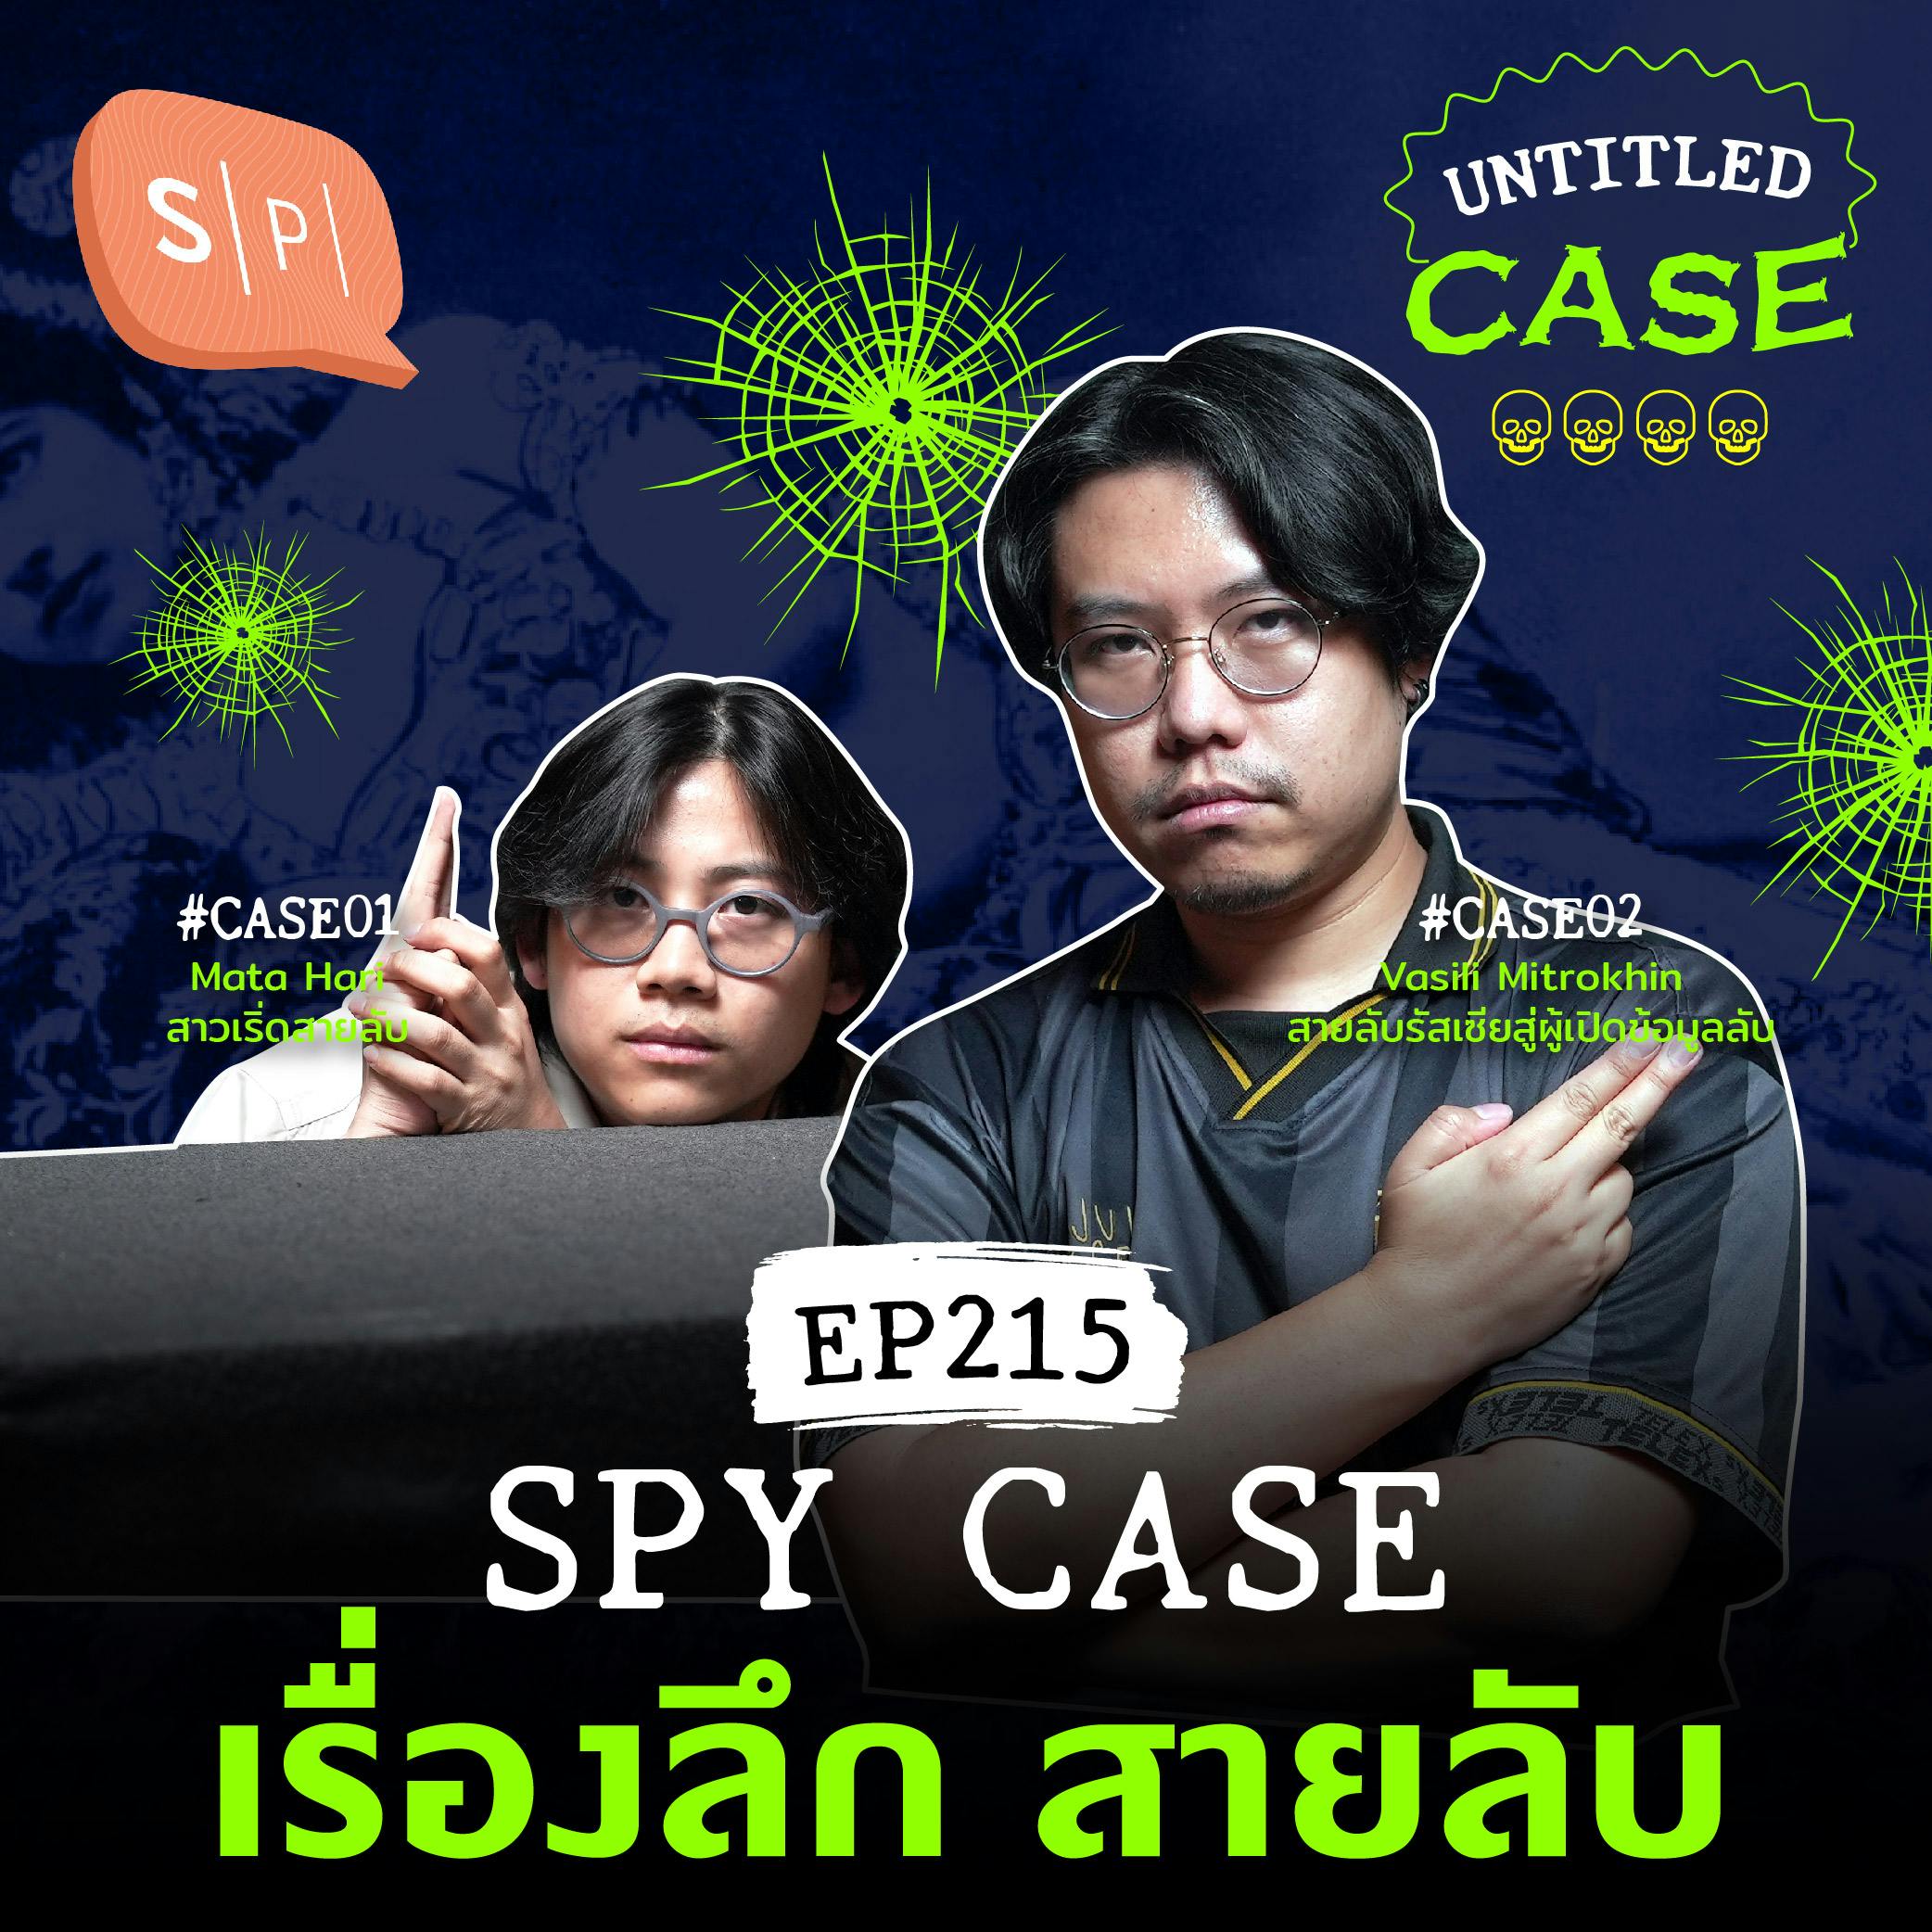 Spy Case เรื่องลึก สายลับ | Untitled Case EP215